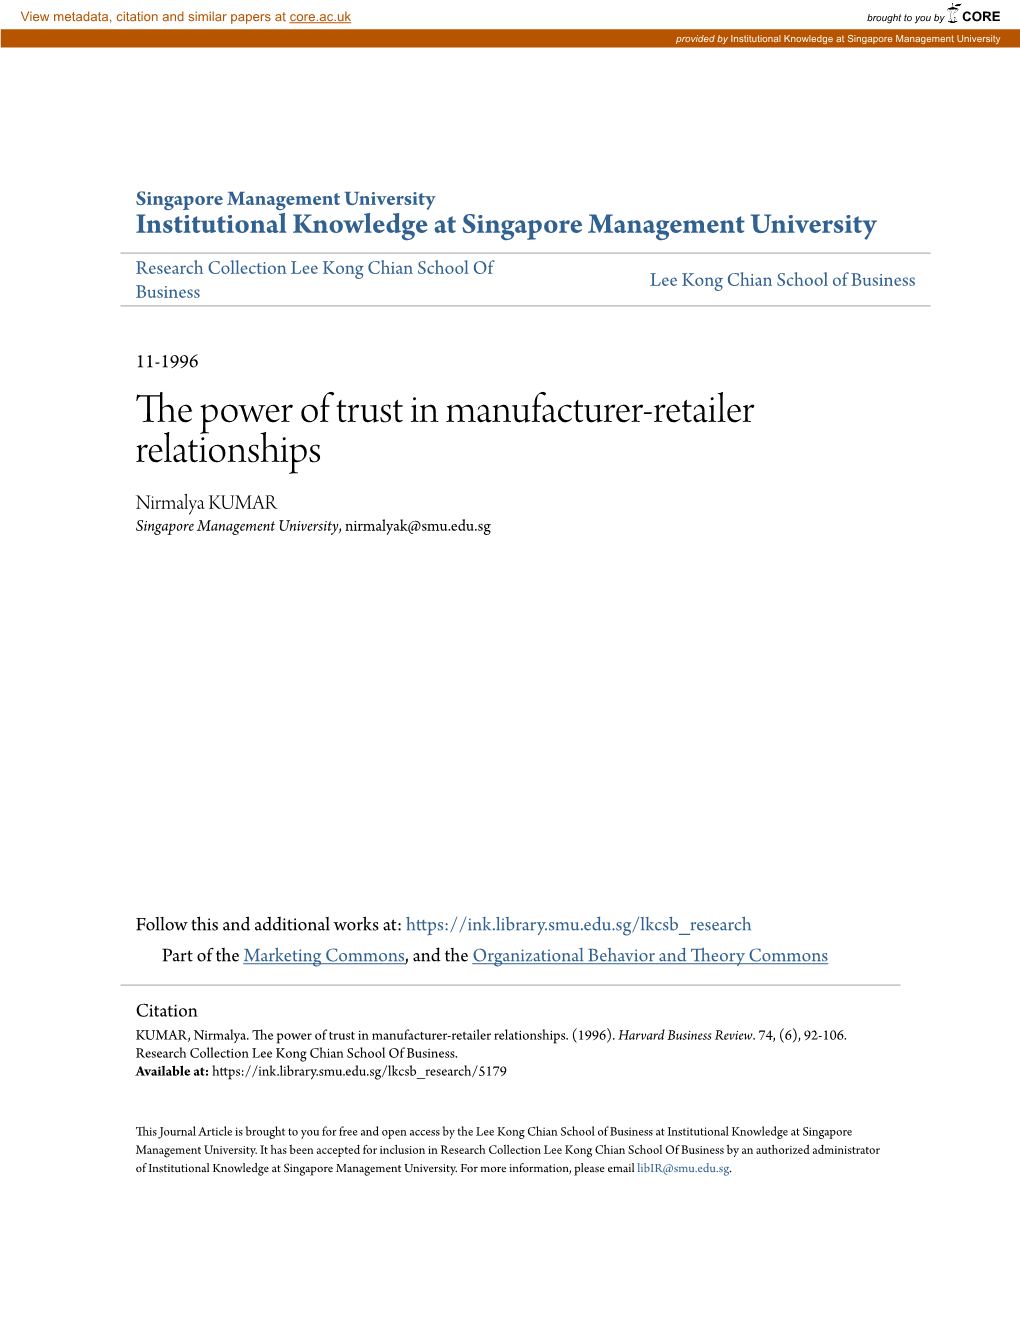 The Power of Trust in Manufacturer-Retailer Relationships Nirmalya KUMAR Singapore Management University, Nirmalyak@Smu.Edu.Sg